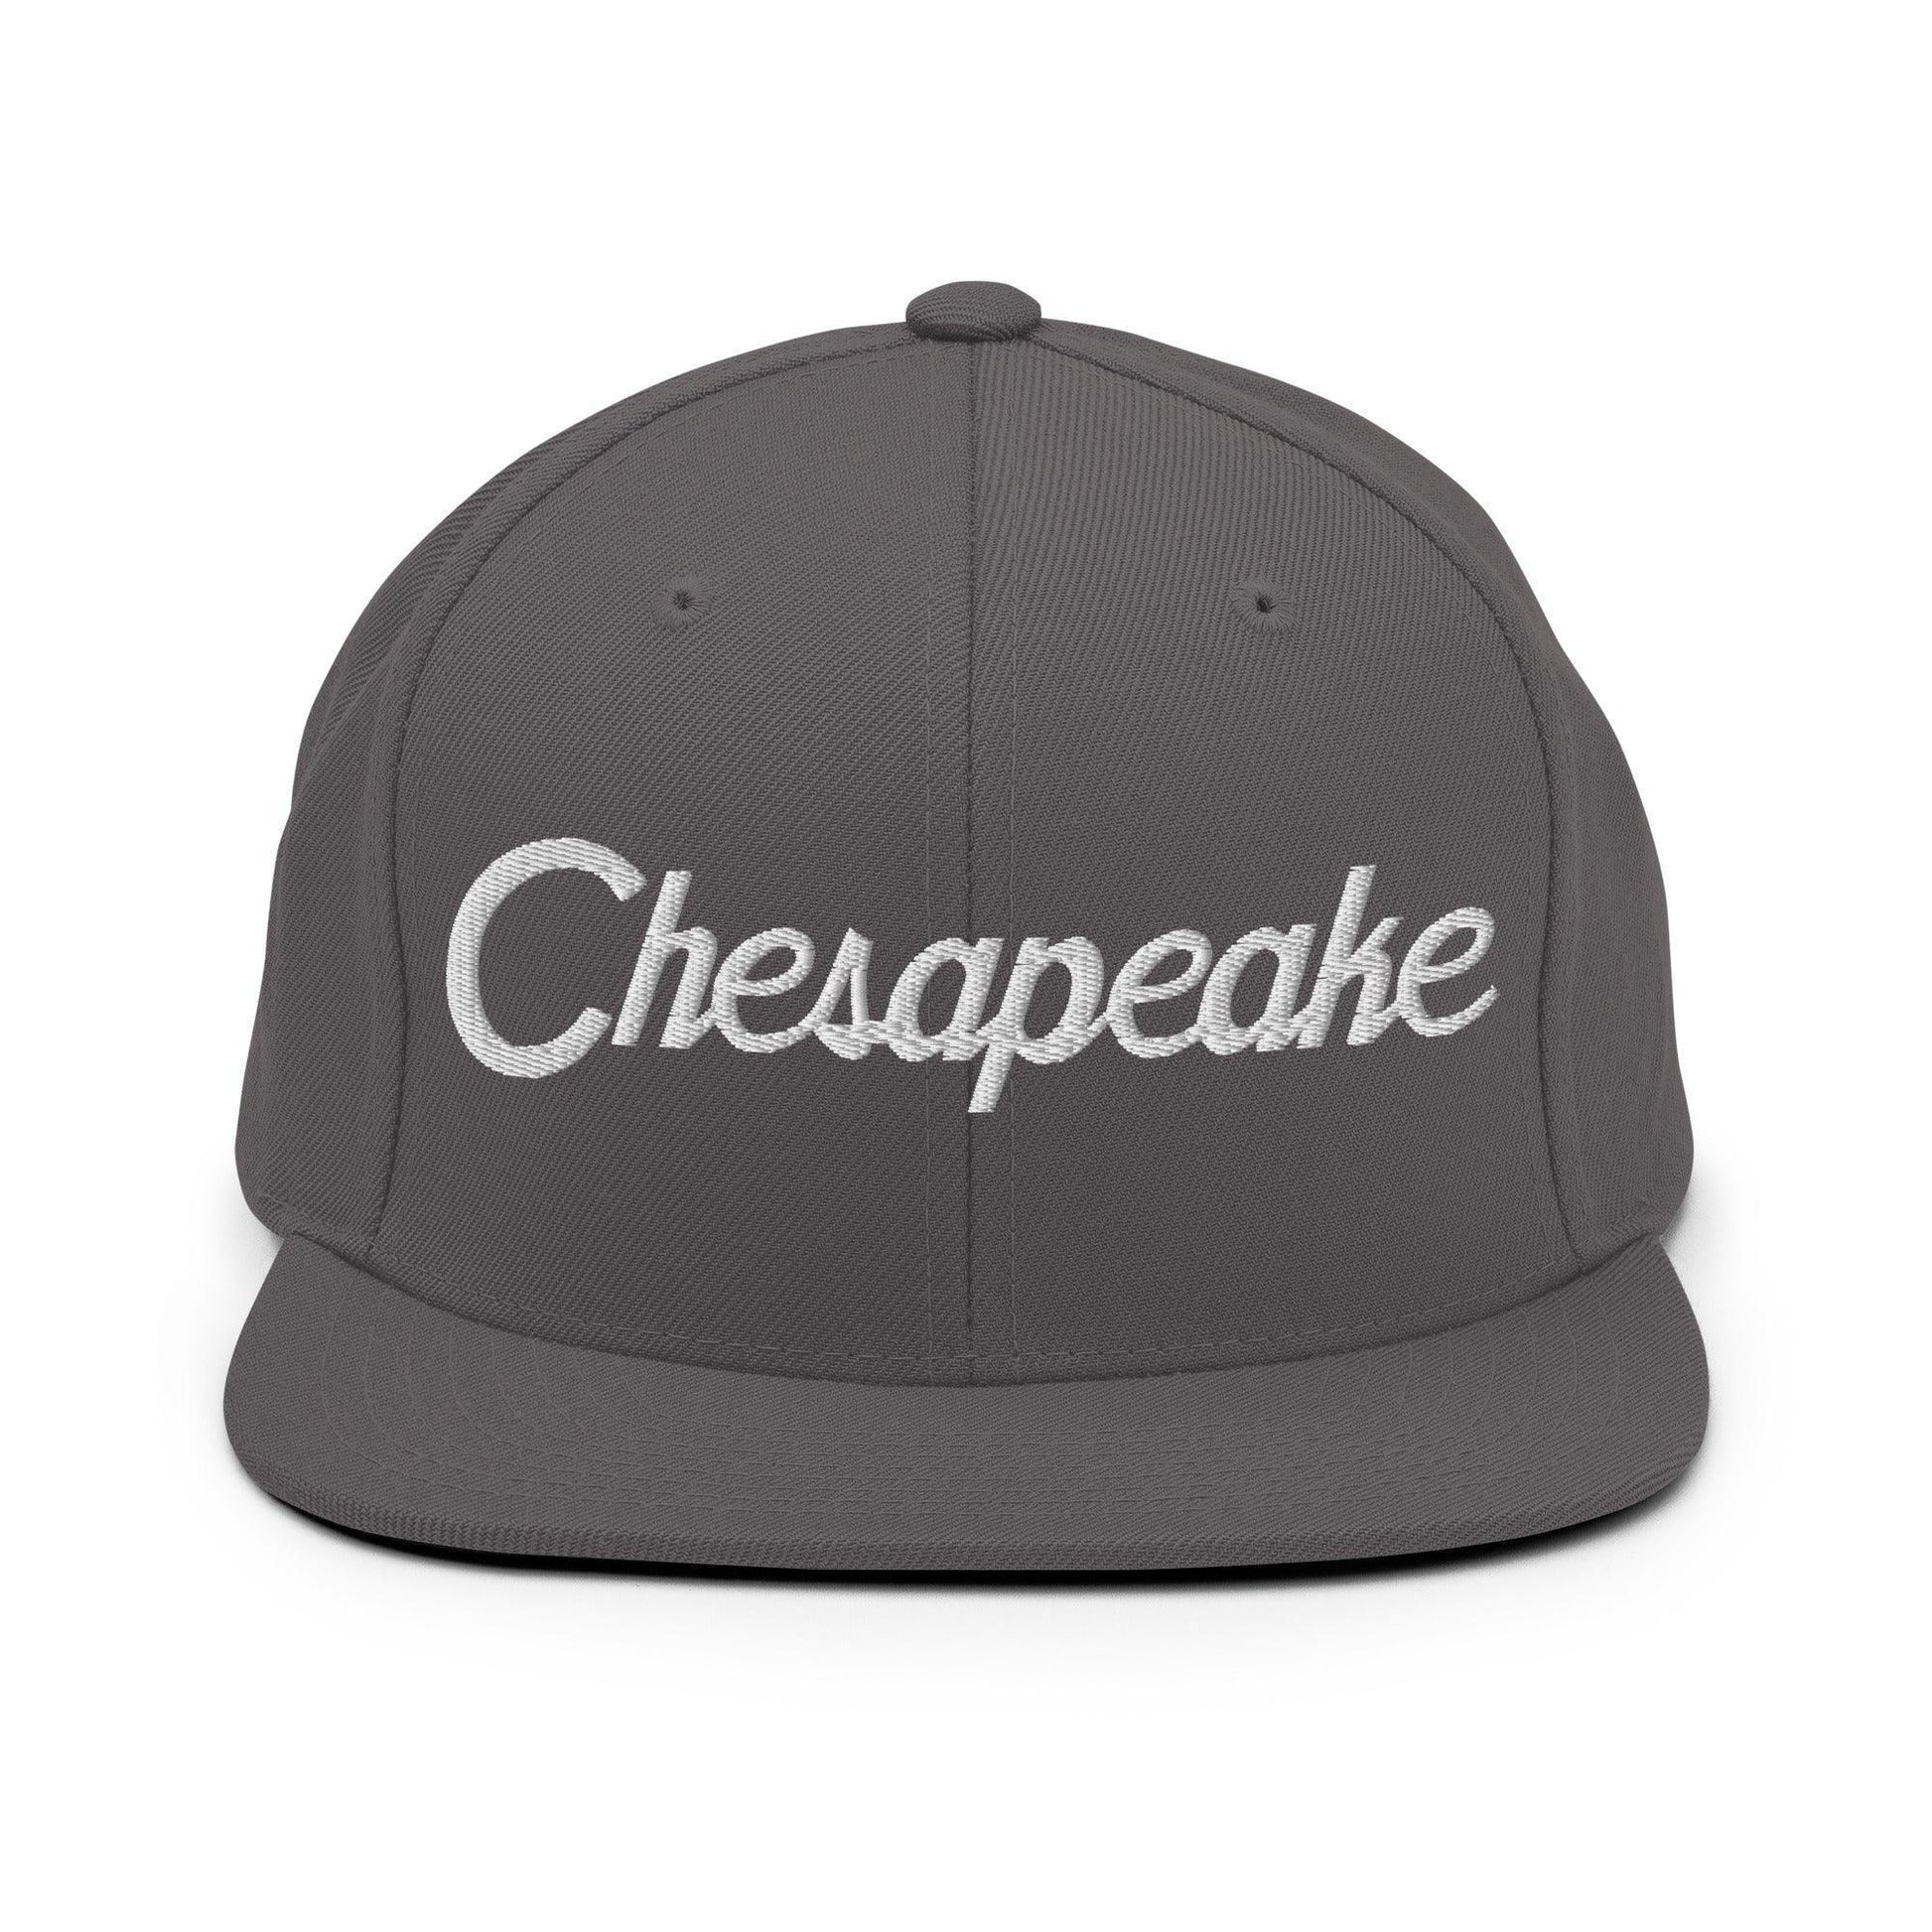 Chesapeake Script Snapback Hat Dark Grey